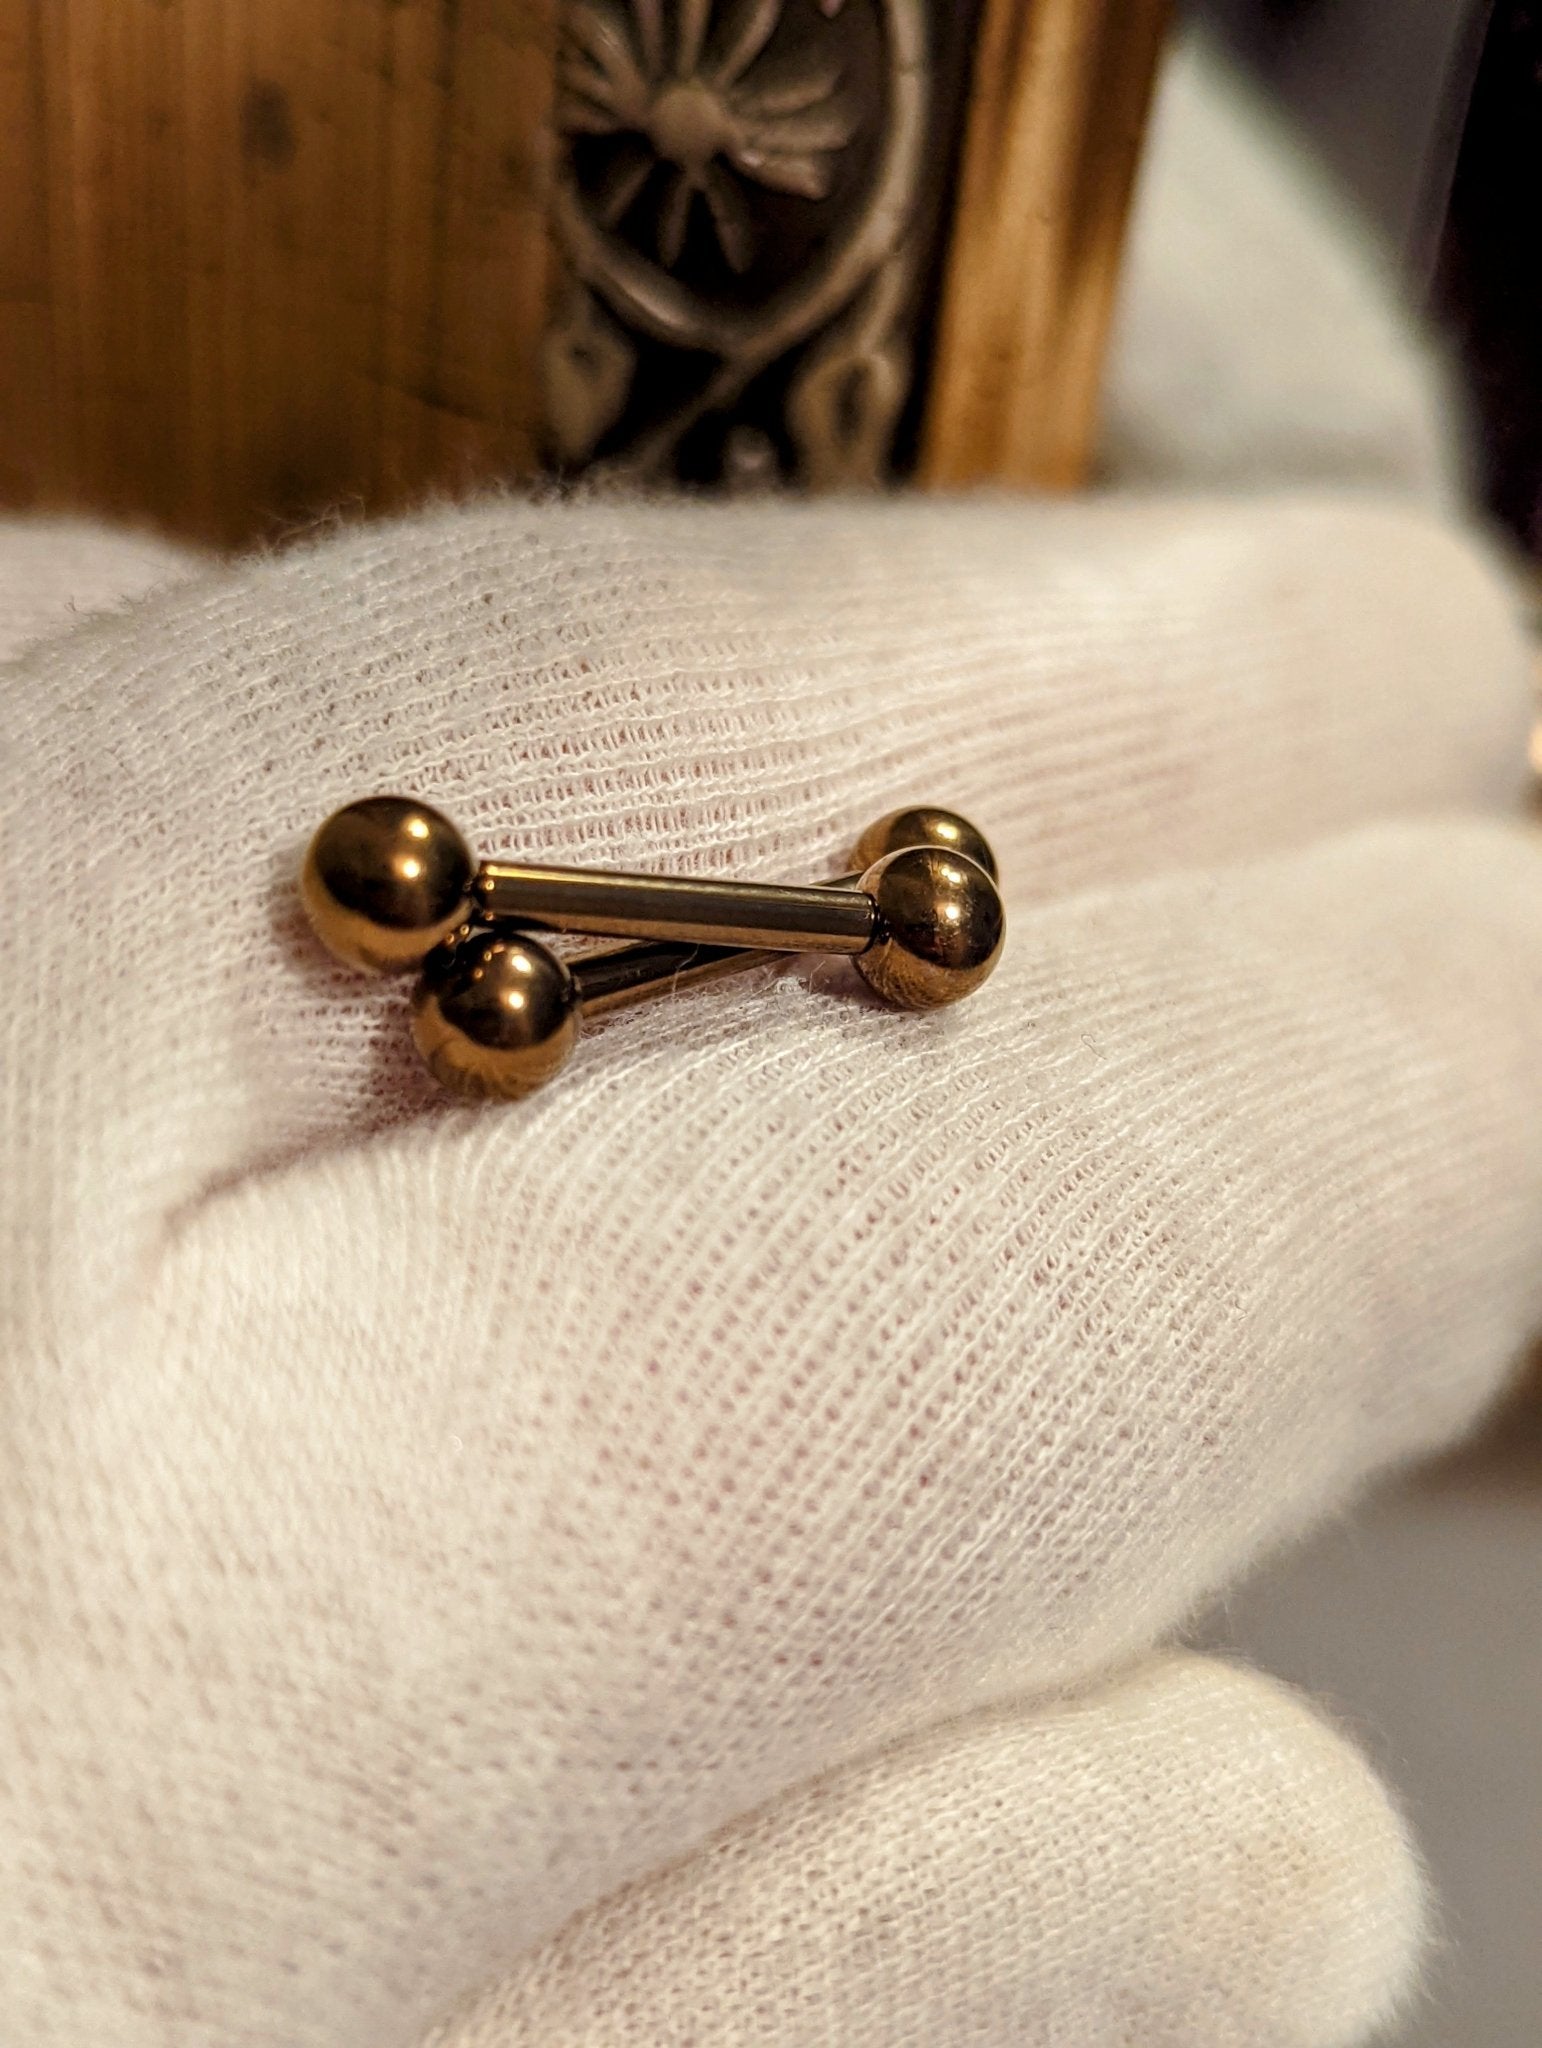 12g Titanium nipple piercing barbells 1/2"-5/8" straight bars internally threaded 5mm ball ends pair - Siren Body Jewelry